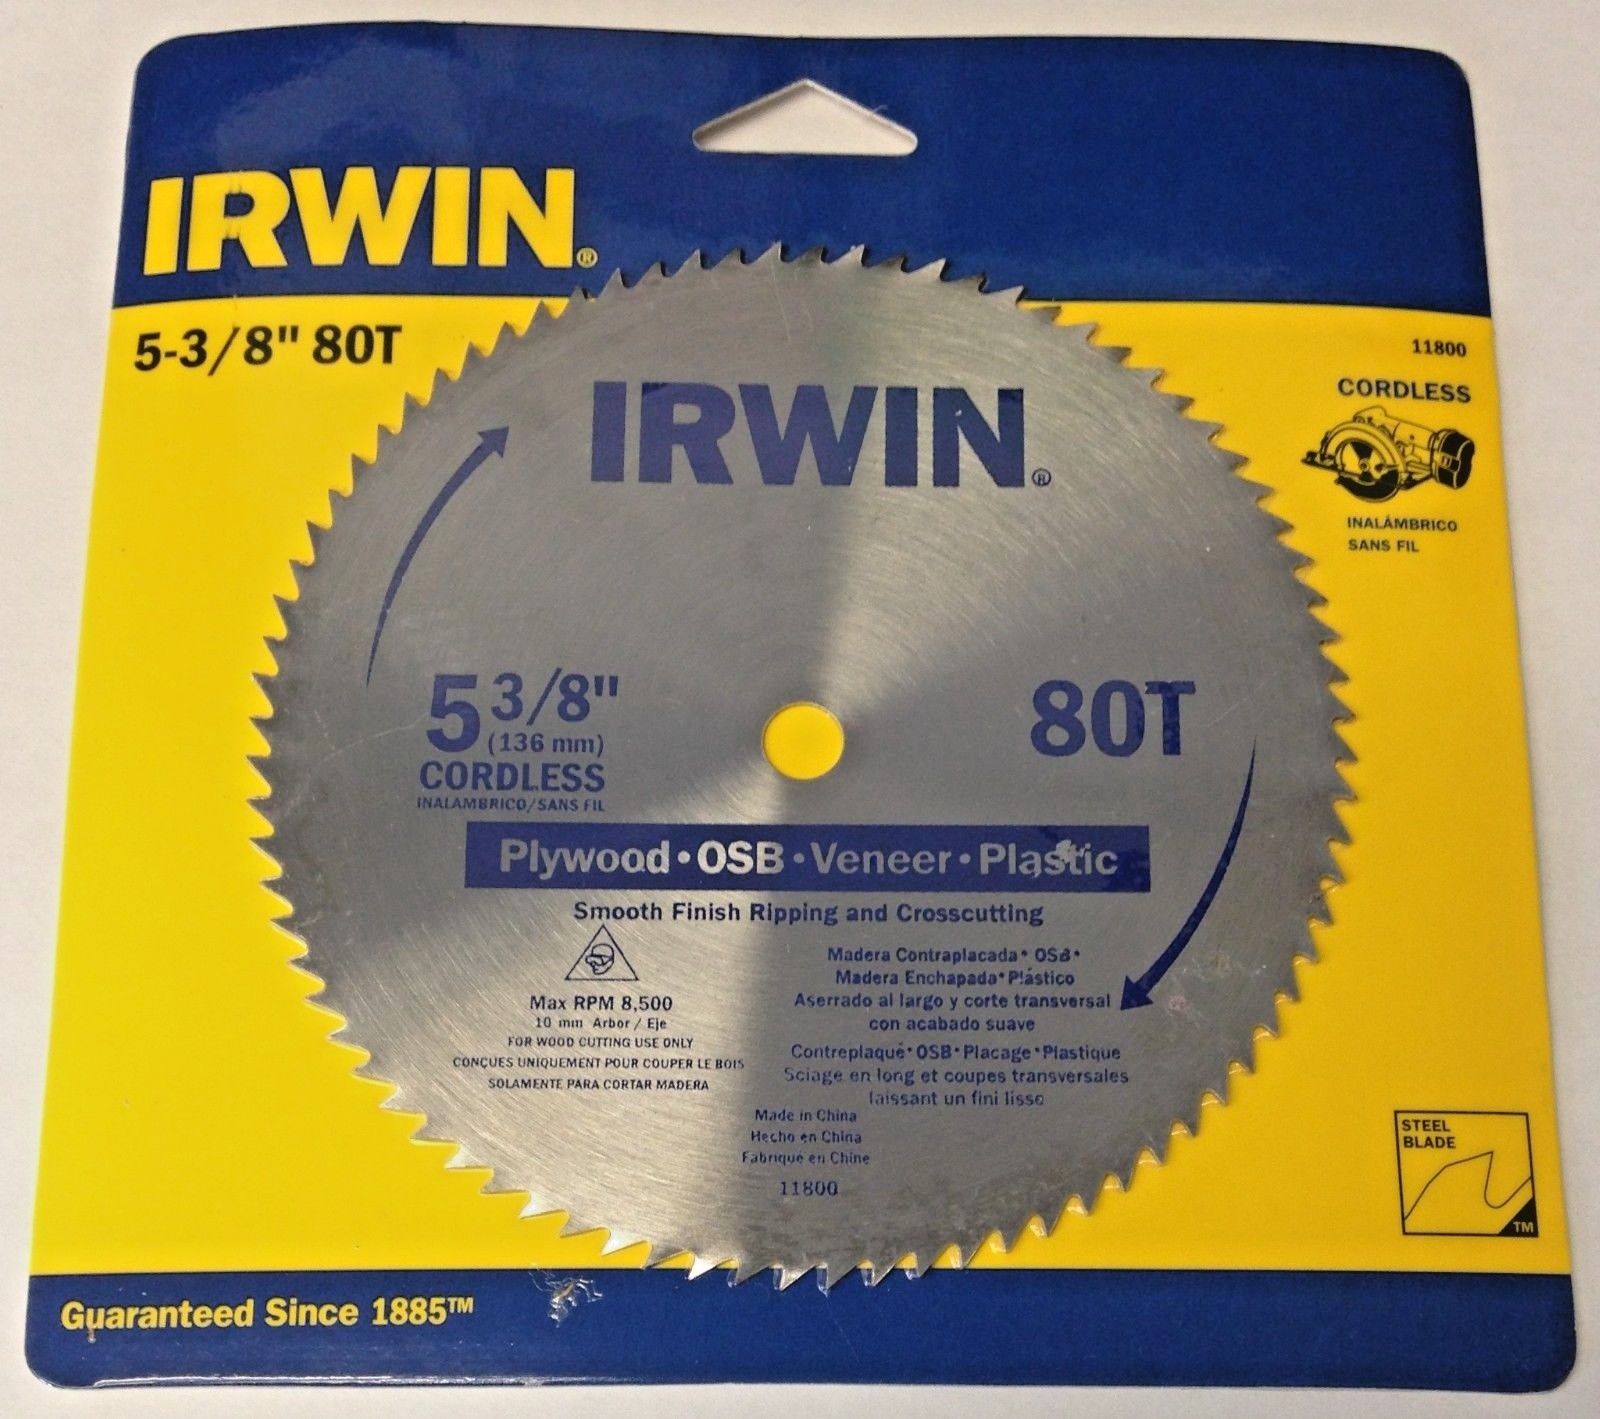 Irwin 11800 5-3/8" x 80T Plywood, OSB, Veneer, Plastic Cordless Saw Blade